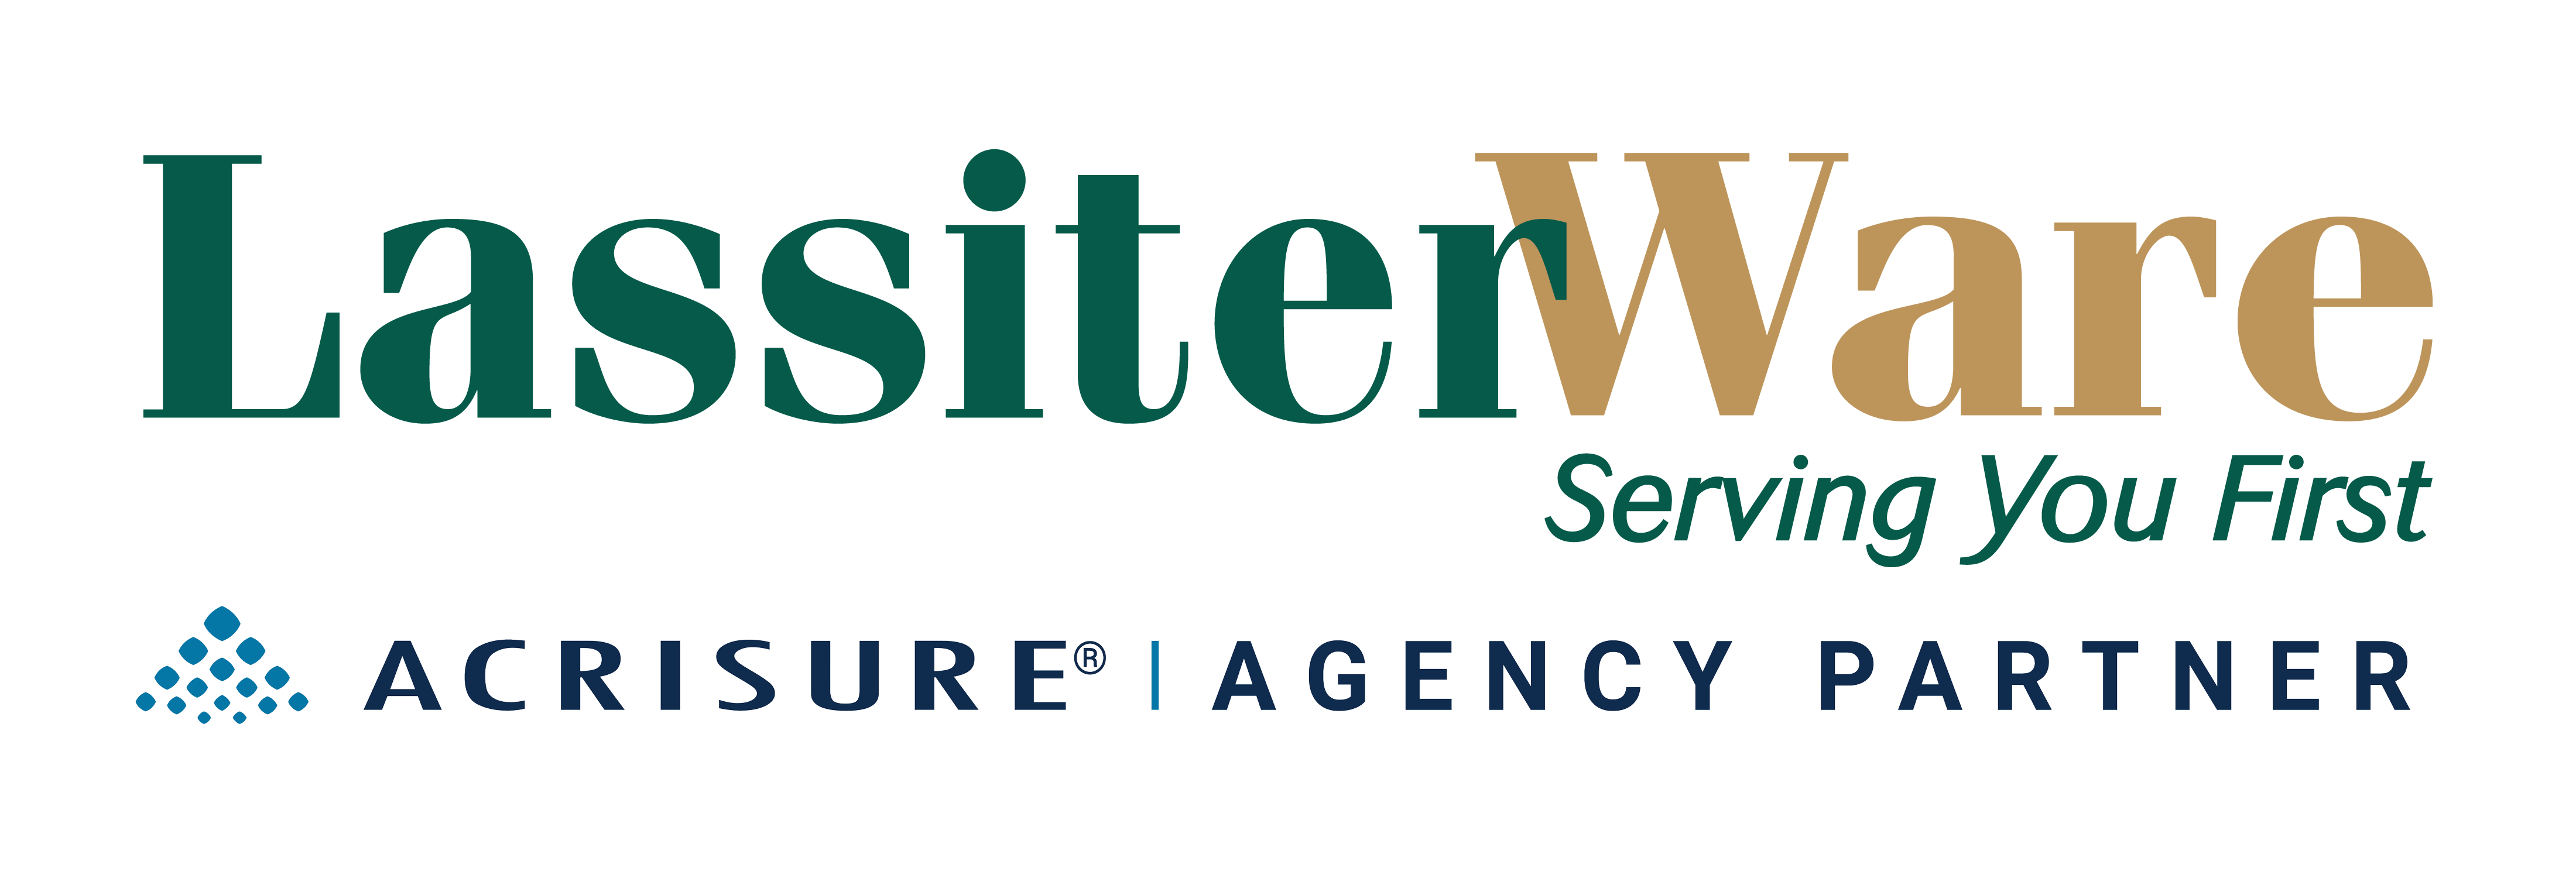 LassiterWare Company Logo